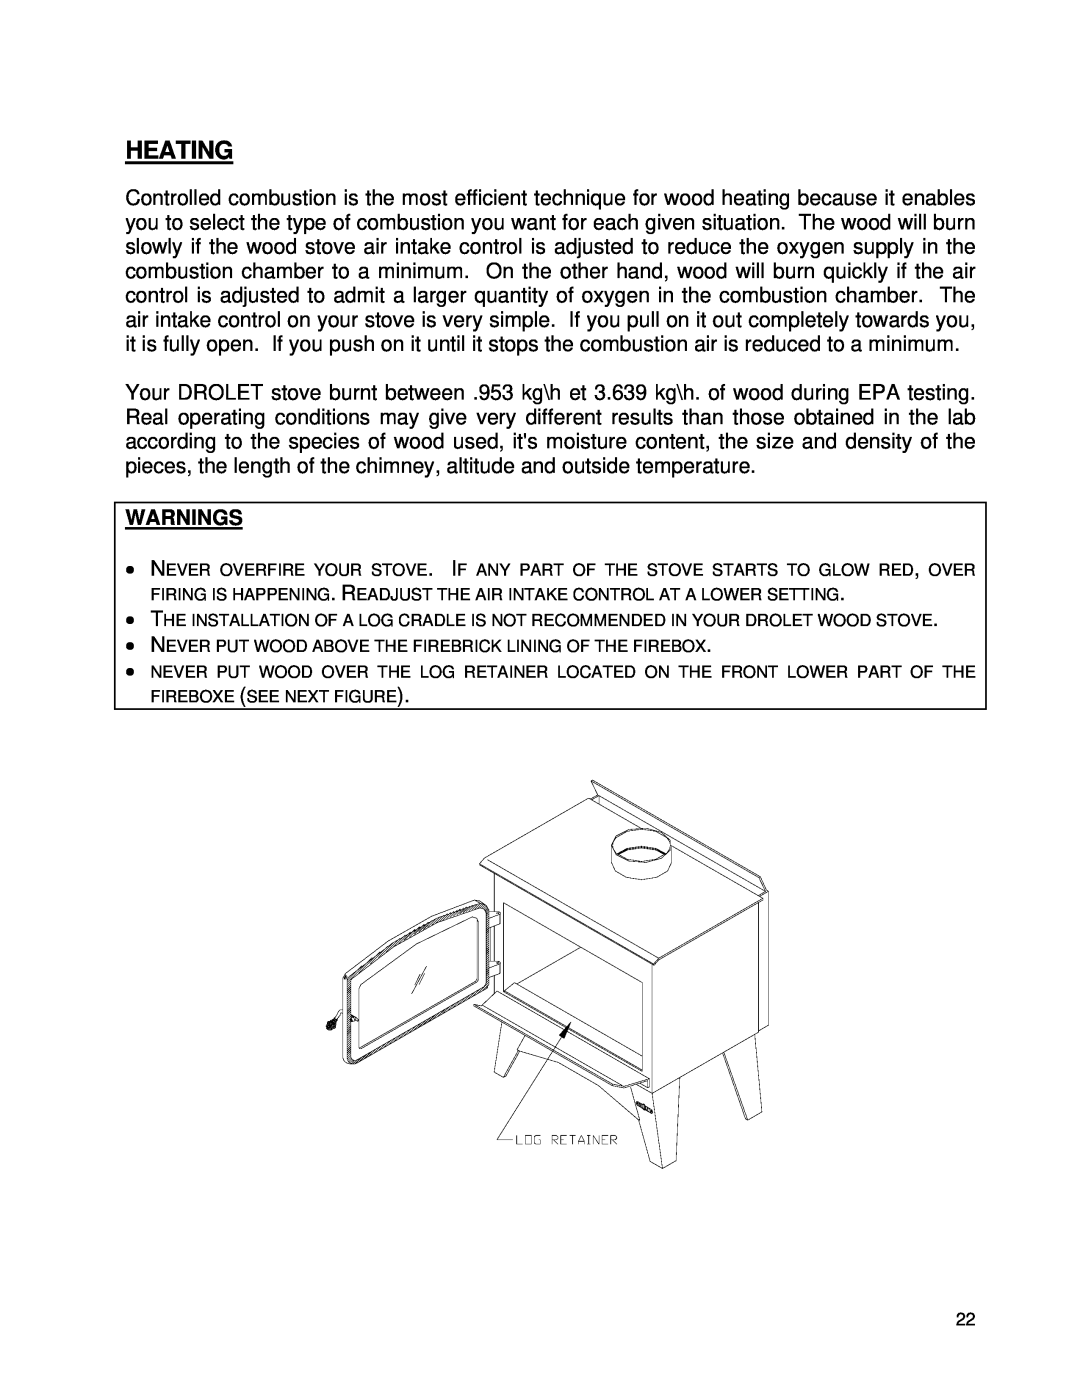 Drolet 58991 owner manual Heating, Warnings 